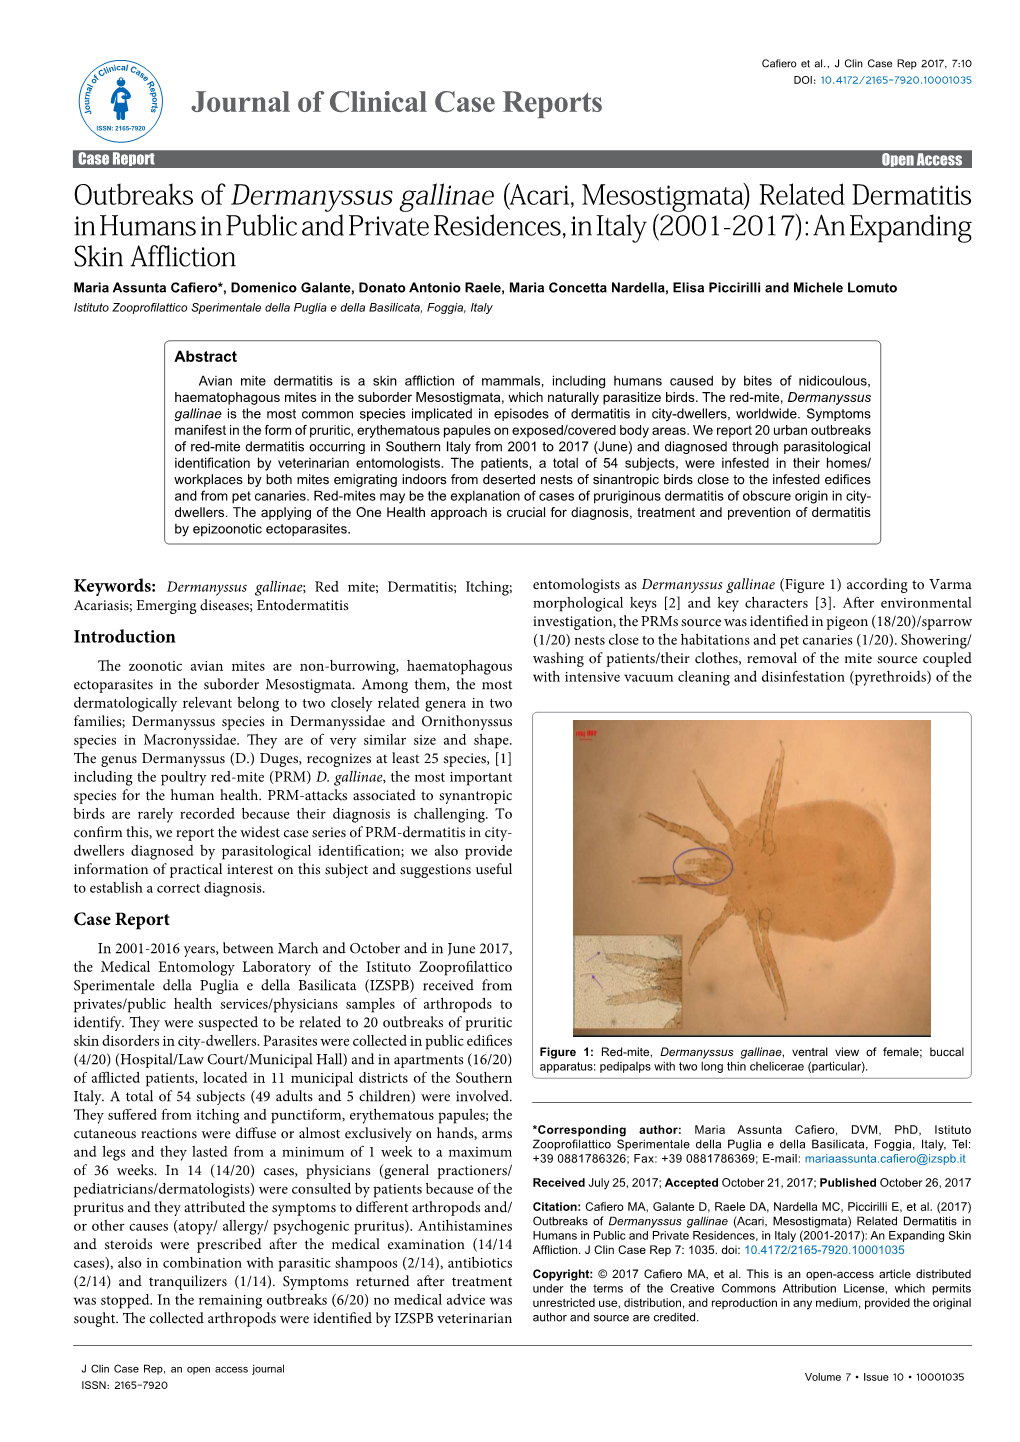 Outbreaks of Dermanyssus Gallinae (Acari, Mesostigmata) Related